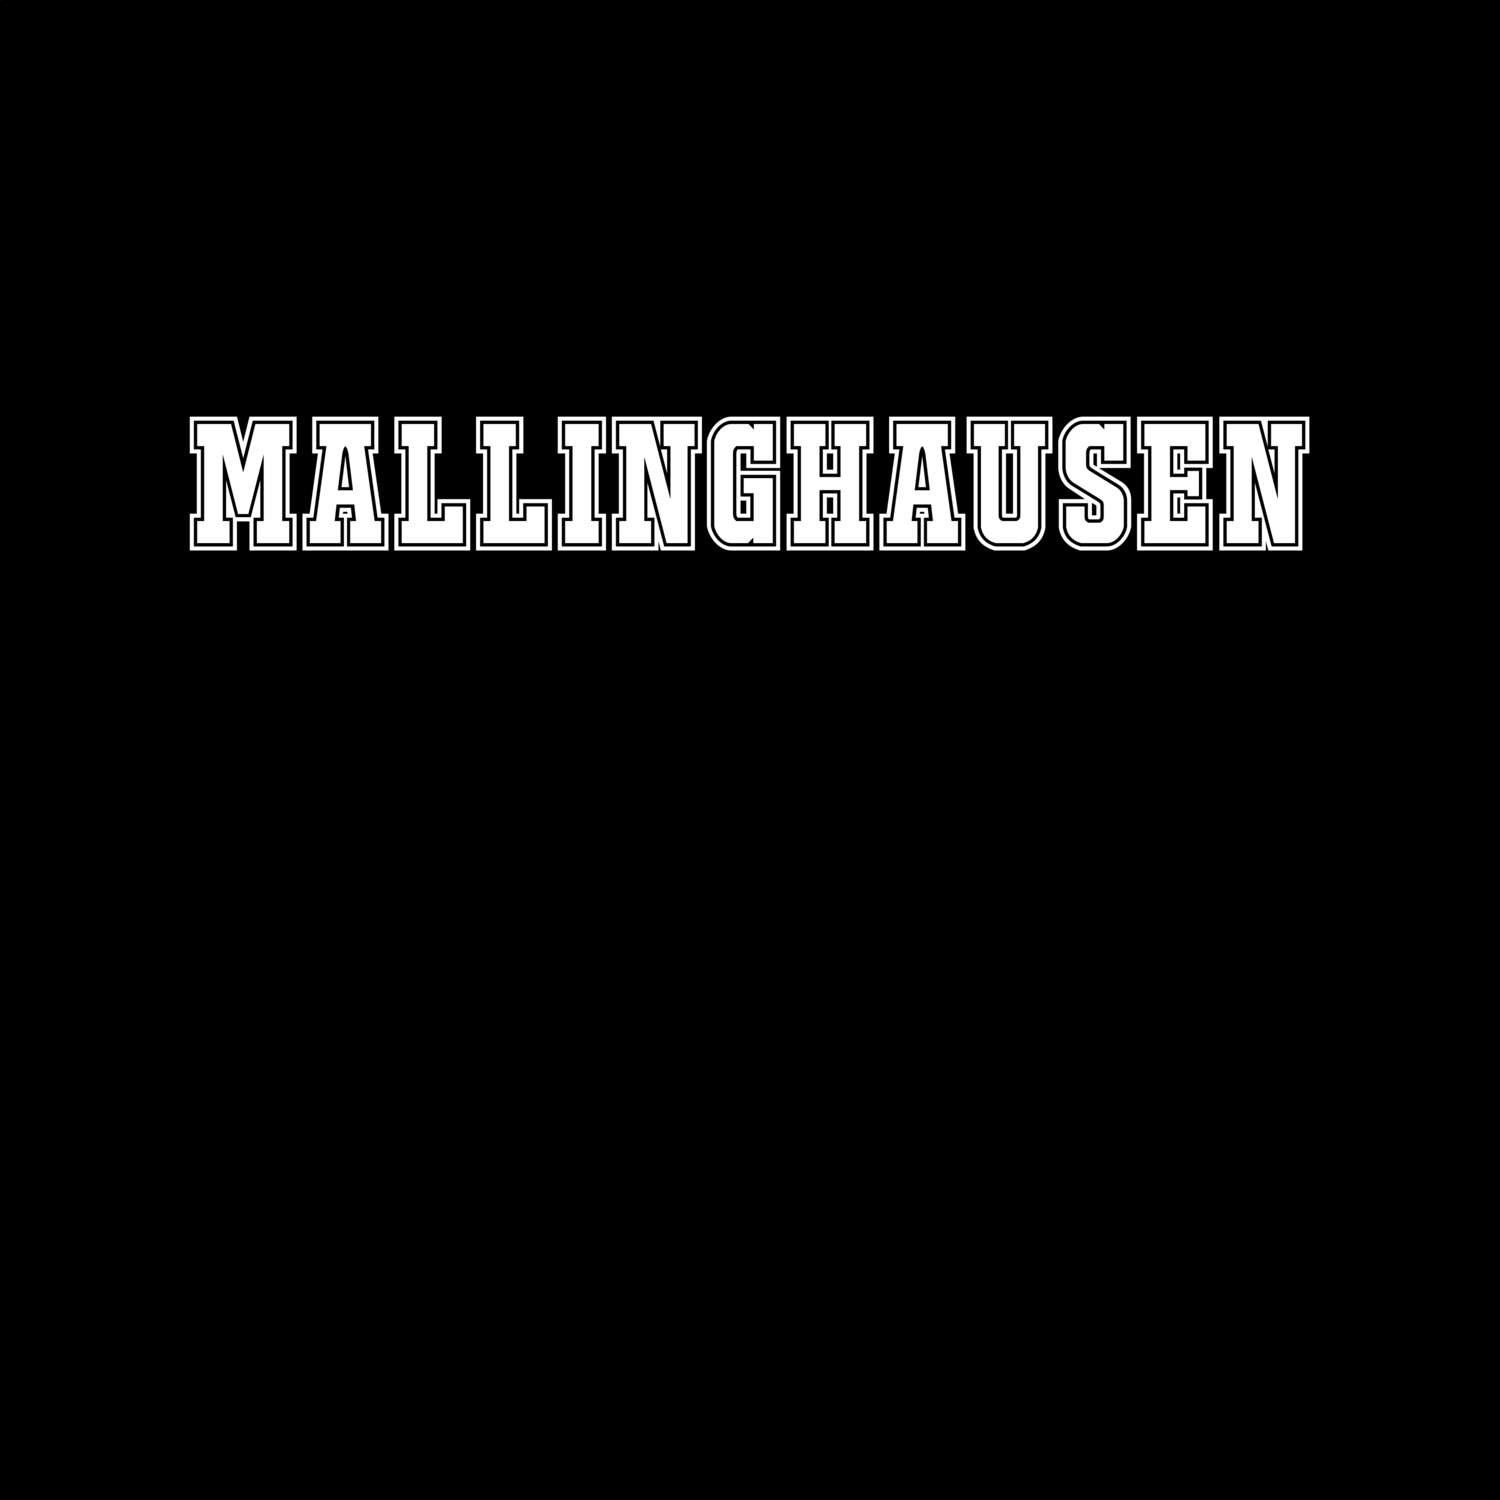 Mallinghausen T-Shirt »Classic«